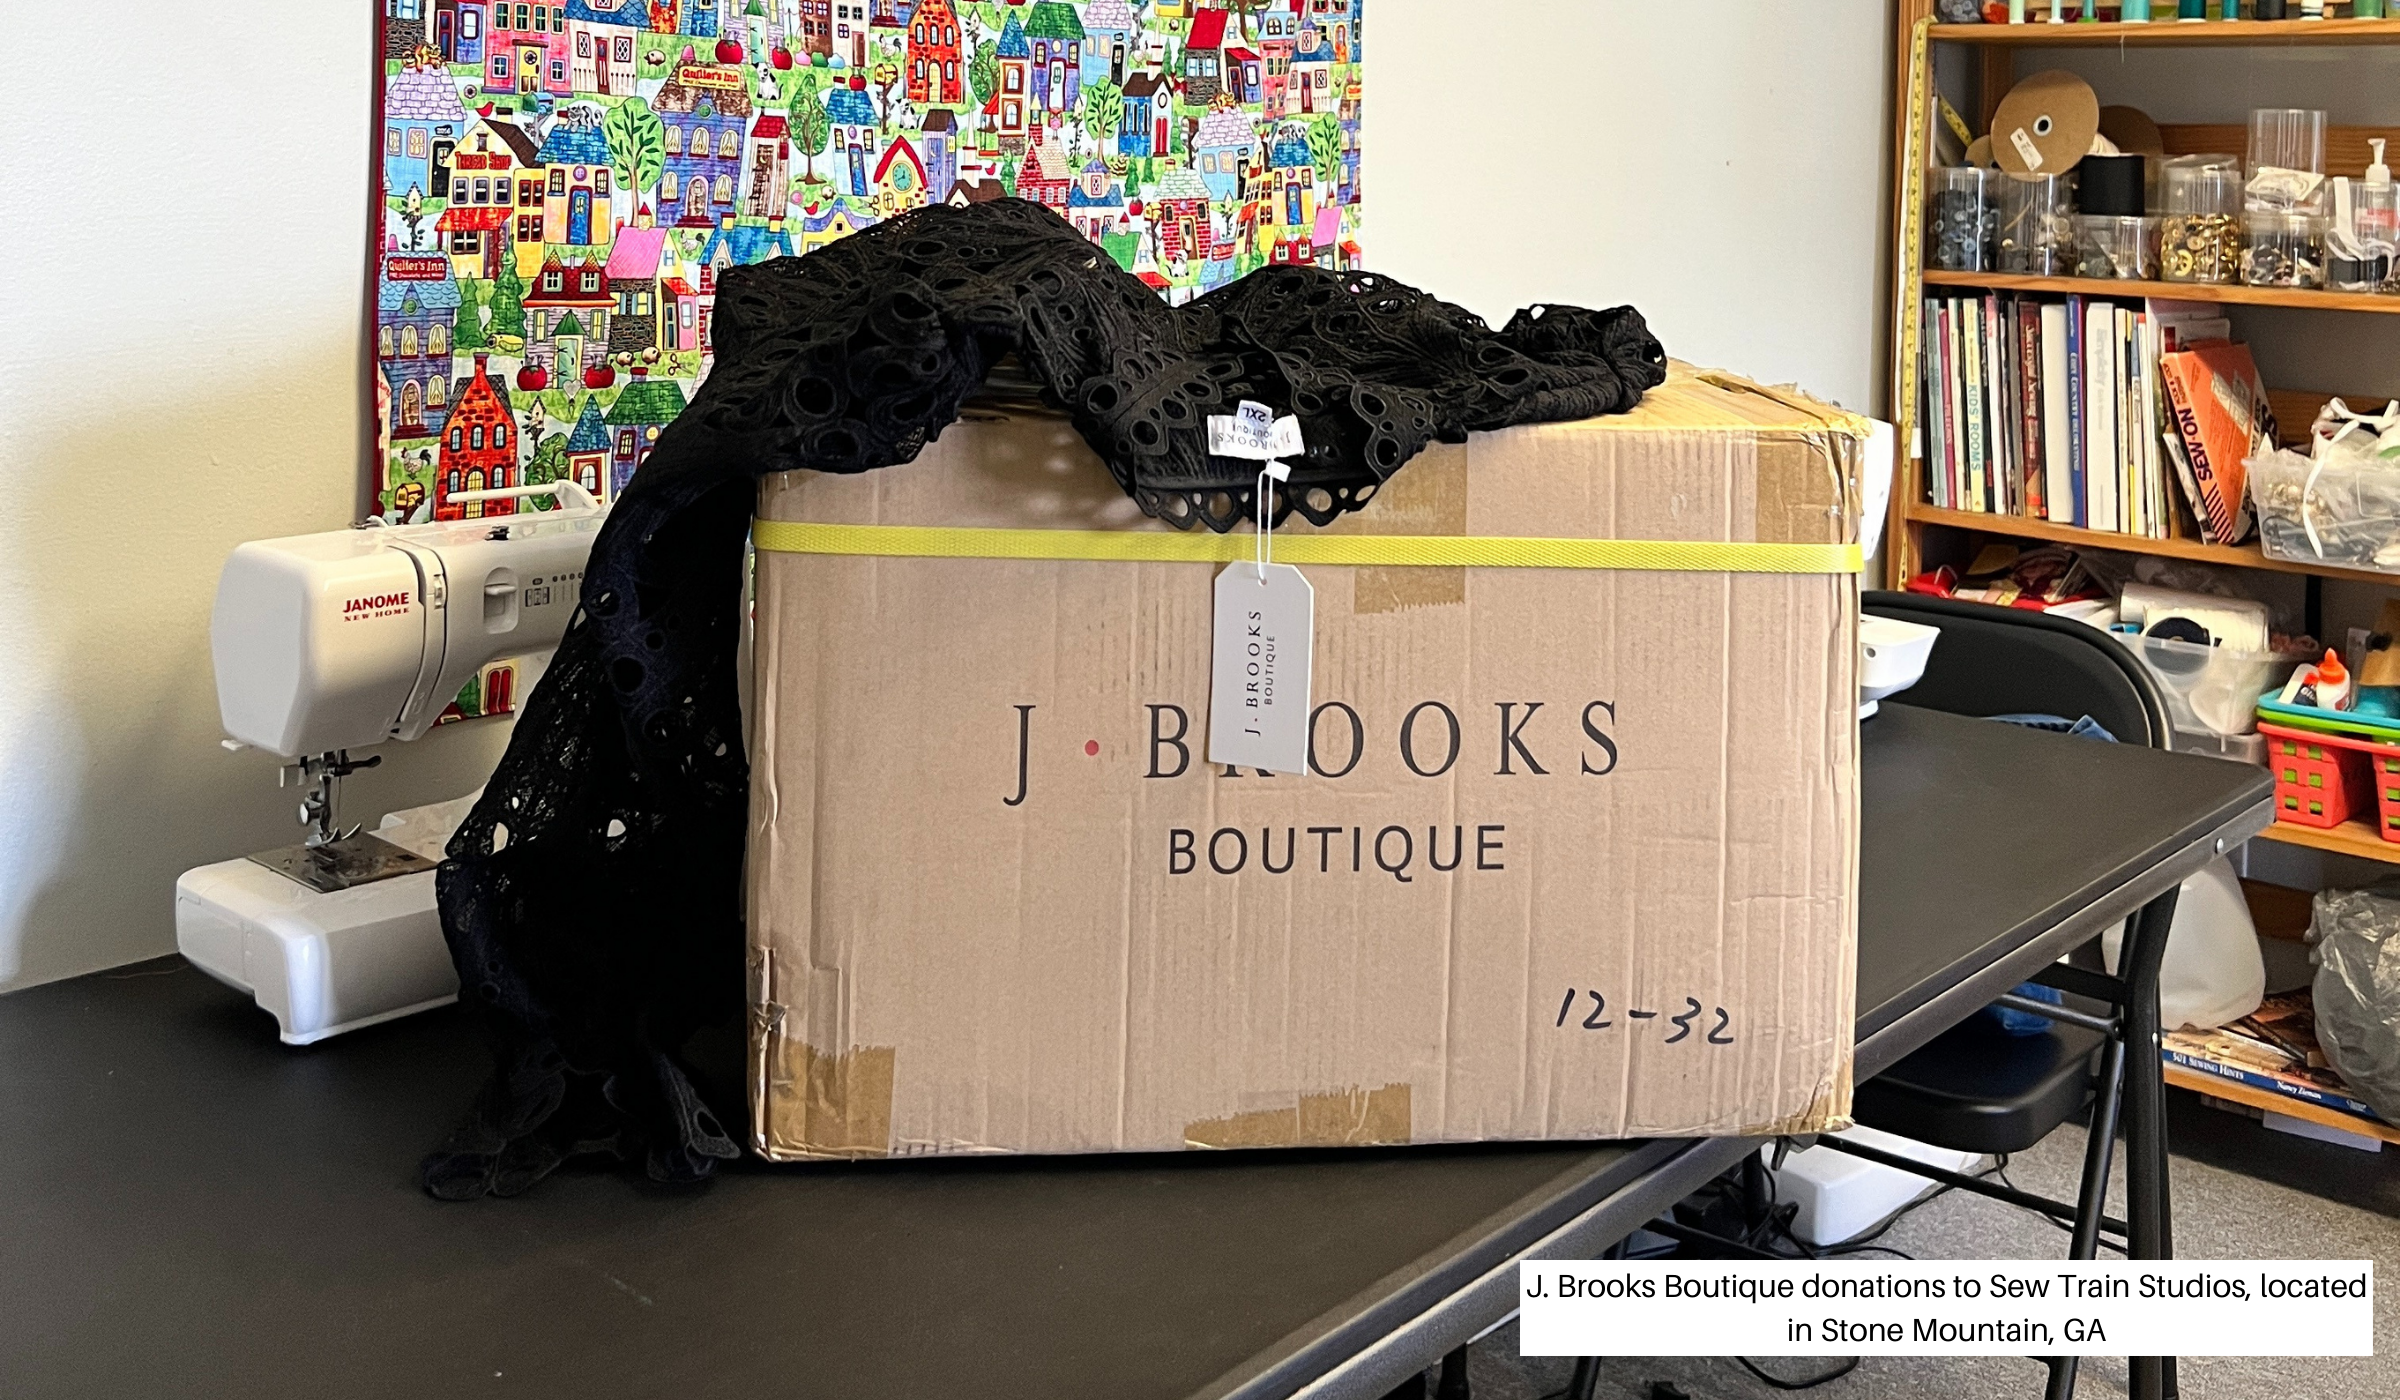 J. Brooks Boutique donations to Sew Train Studios